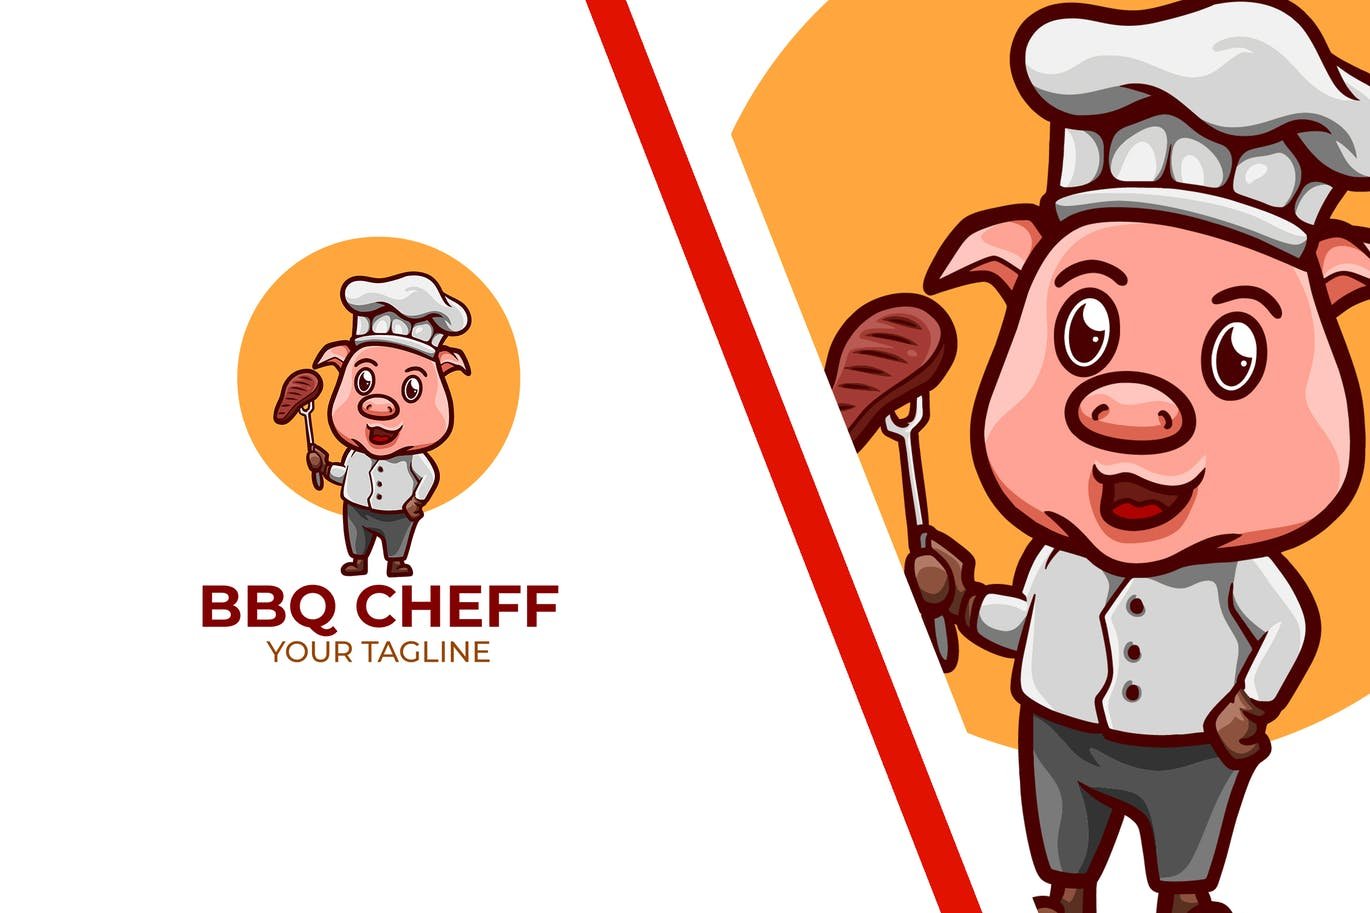 BBQ Chef Mascot cover image.